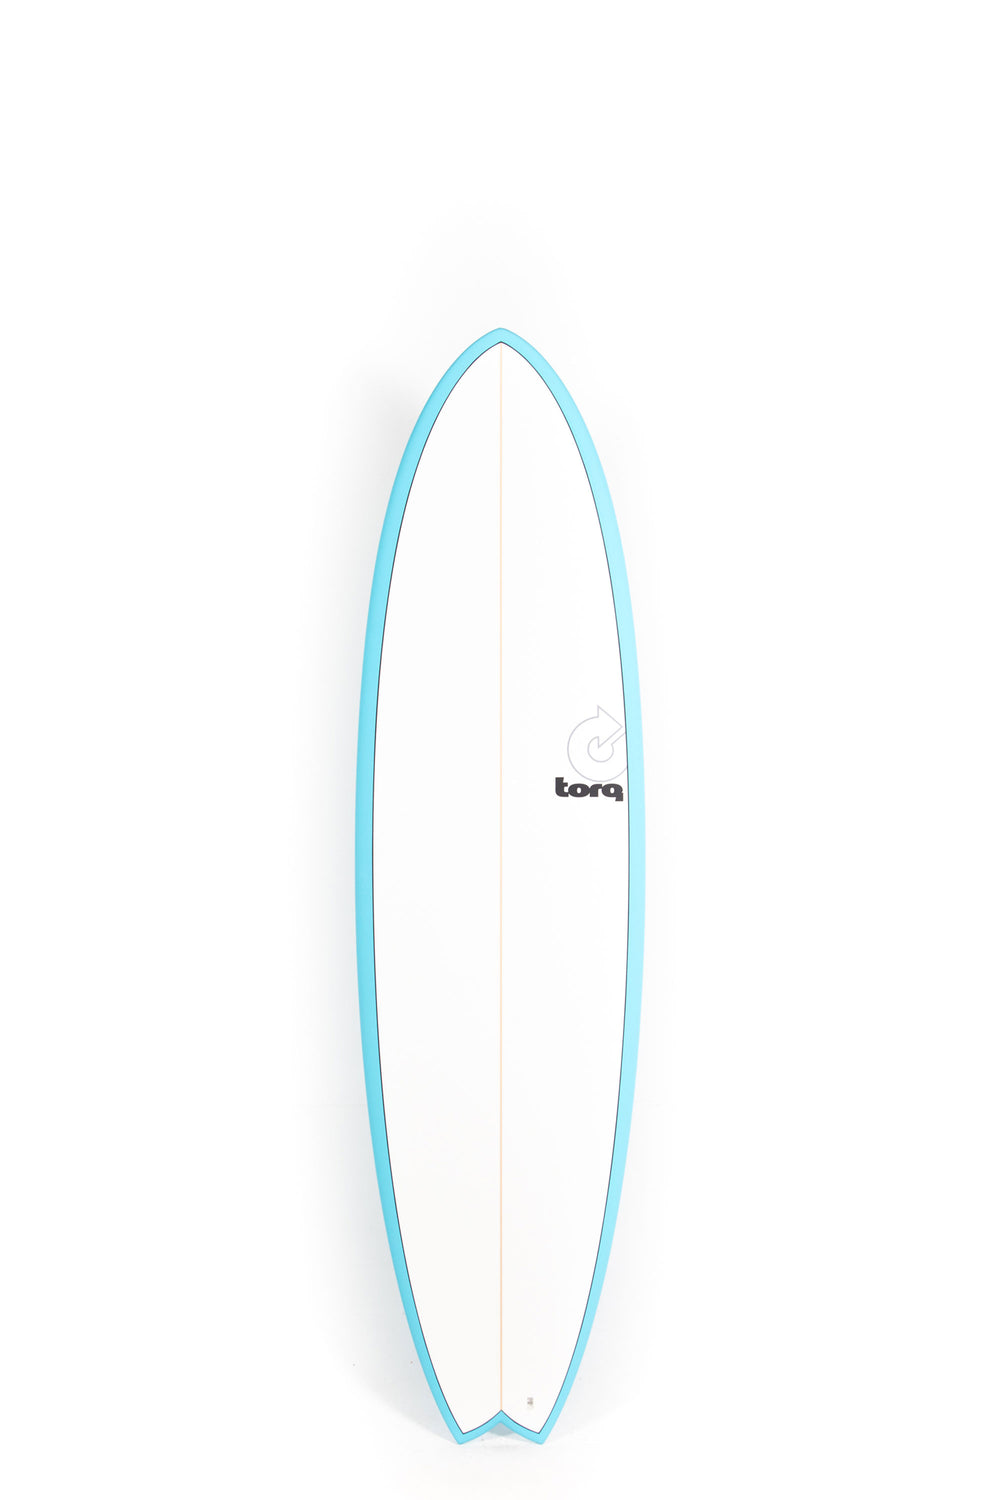 Pukas Surf Shop - Torq Surfboards - MODFISH - 7'2